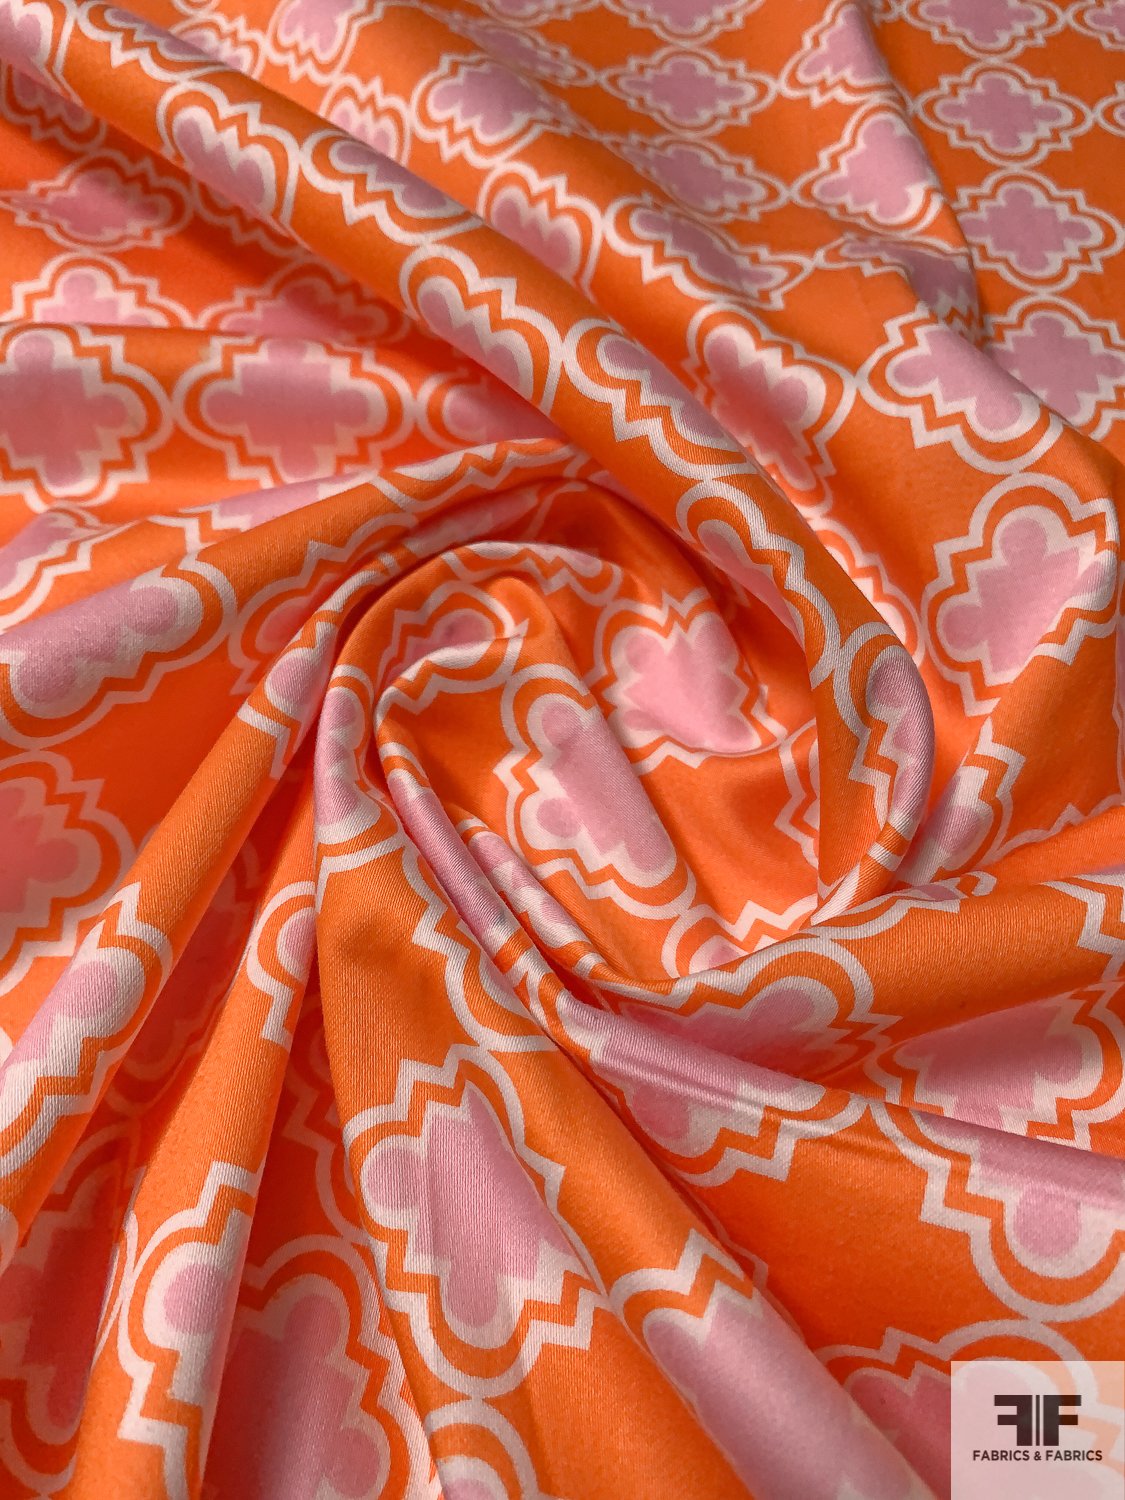 Quatrefoil Printed Stretch Twill Cotton Sateen - Orange / Orchid / White